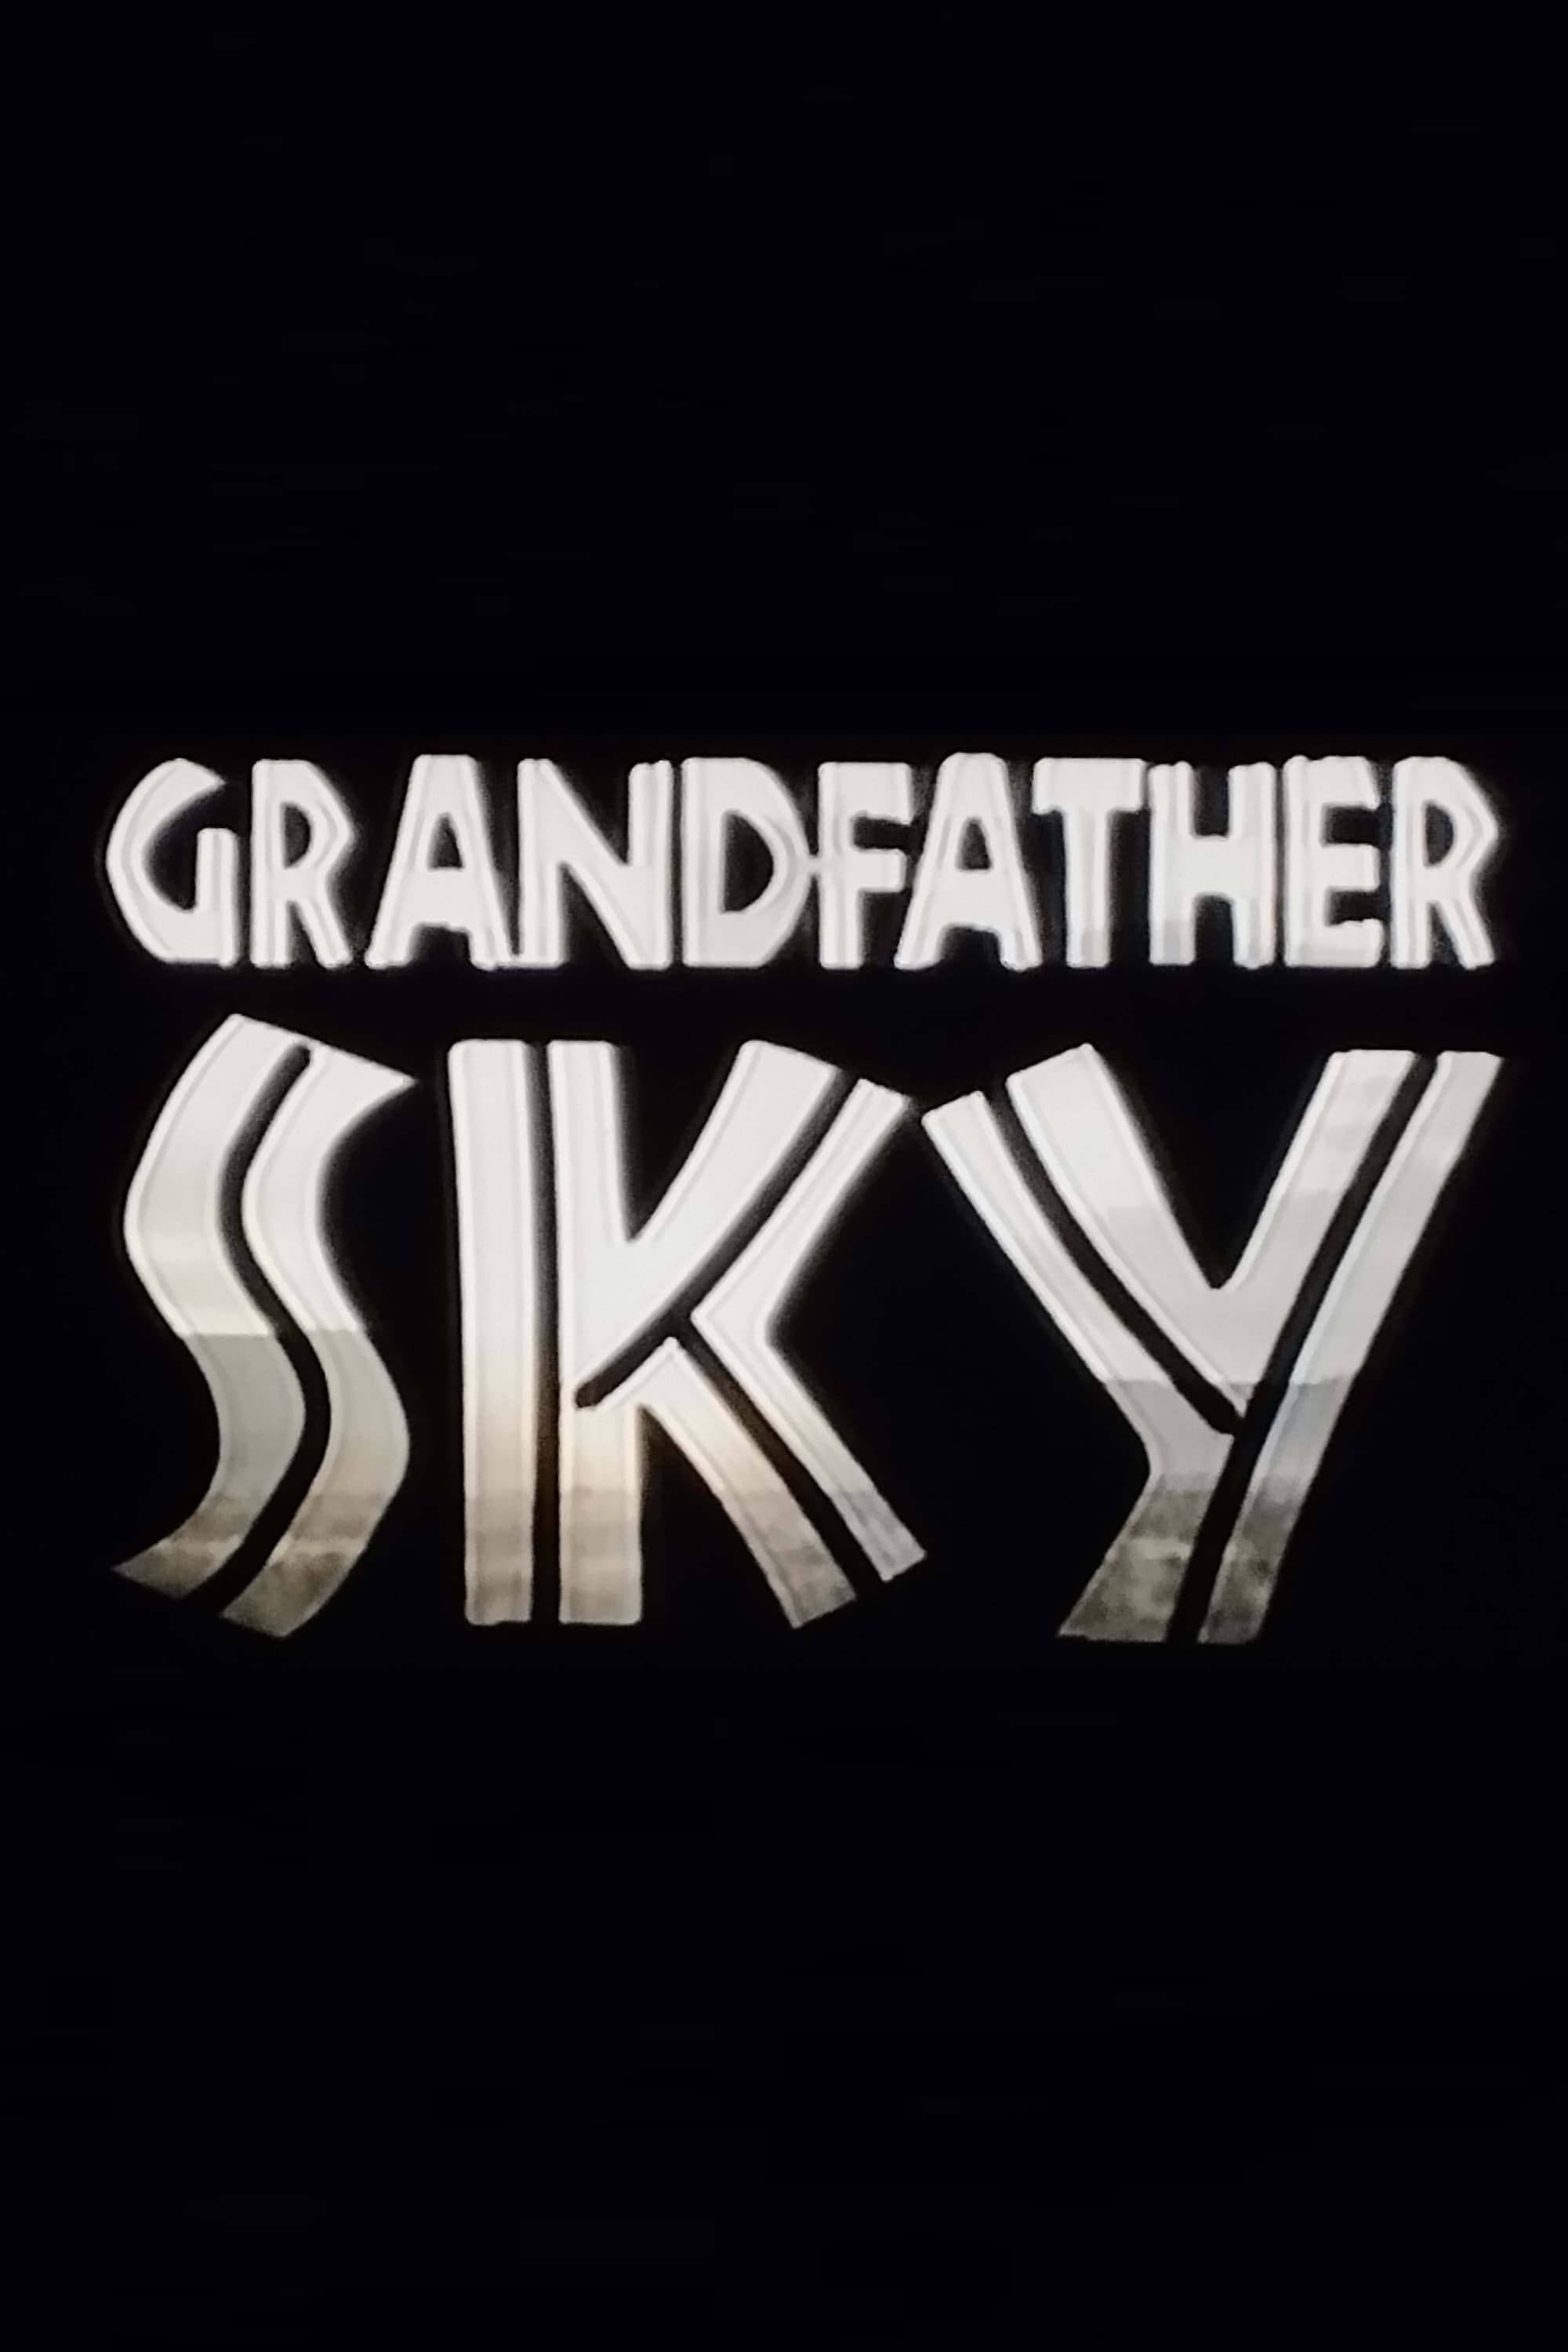 Grandfather Sky